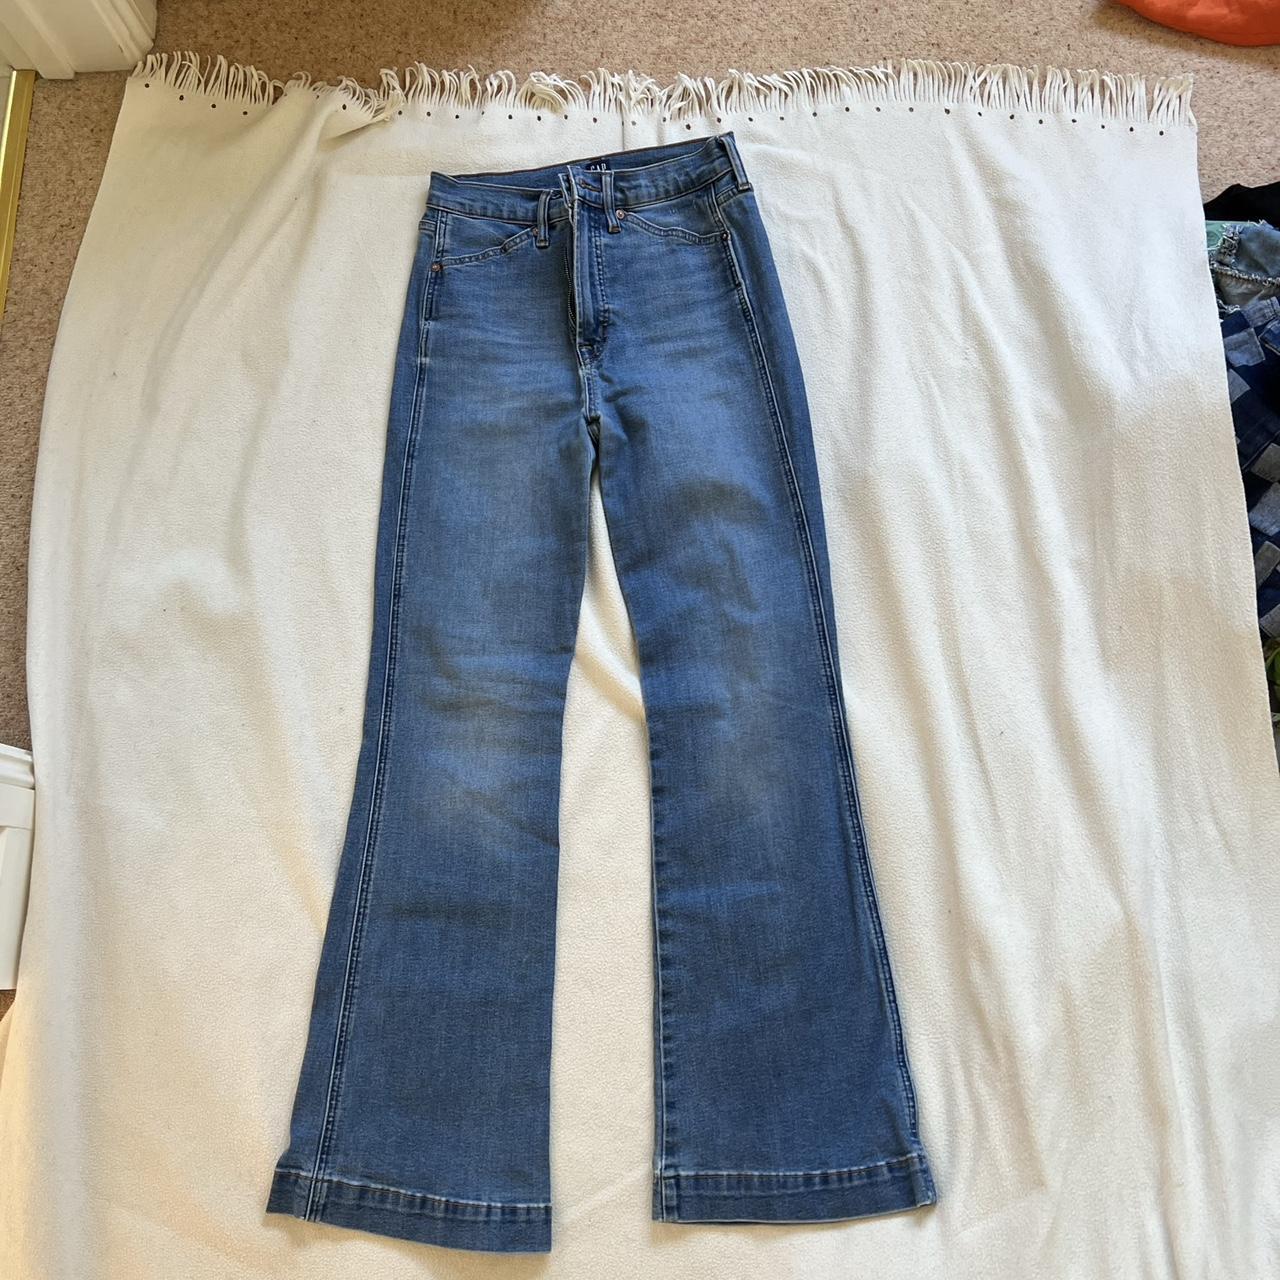 Gap jeans Light blue gap denim jeans Size -28 Flared... - Depop